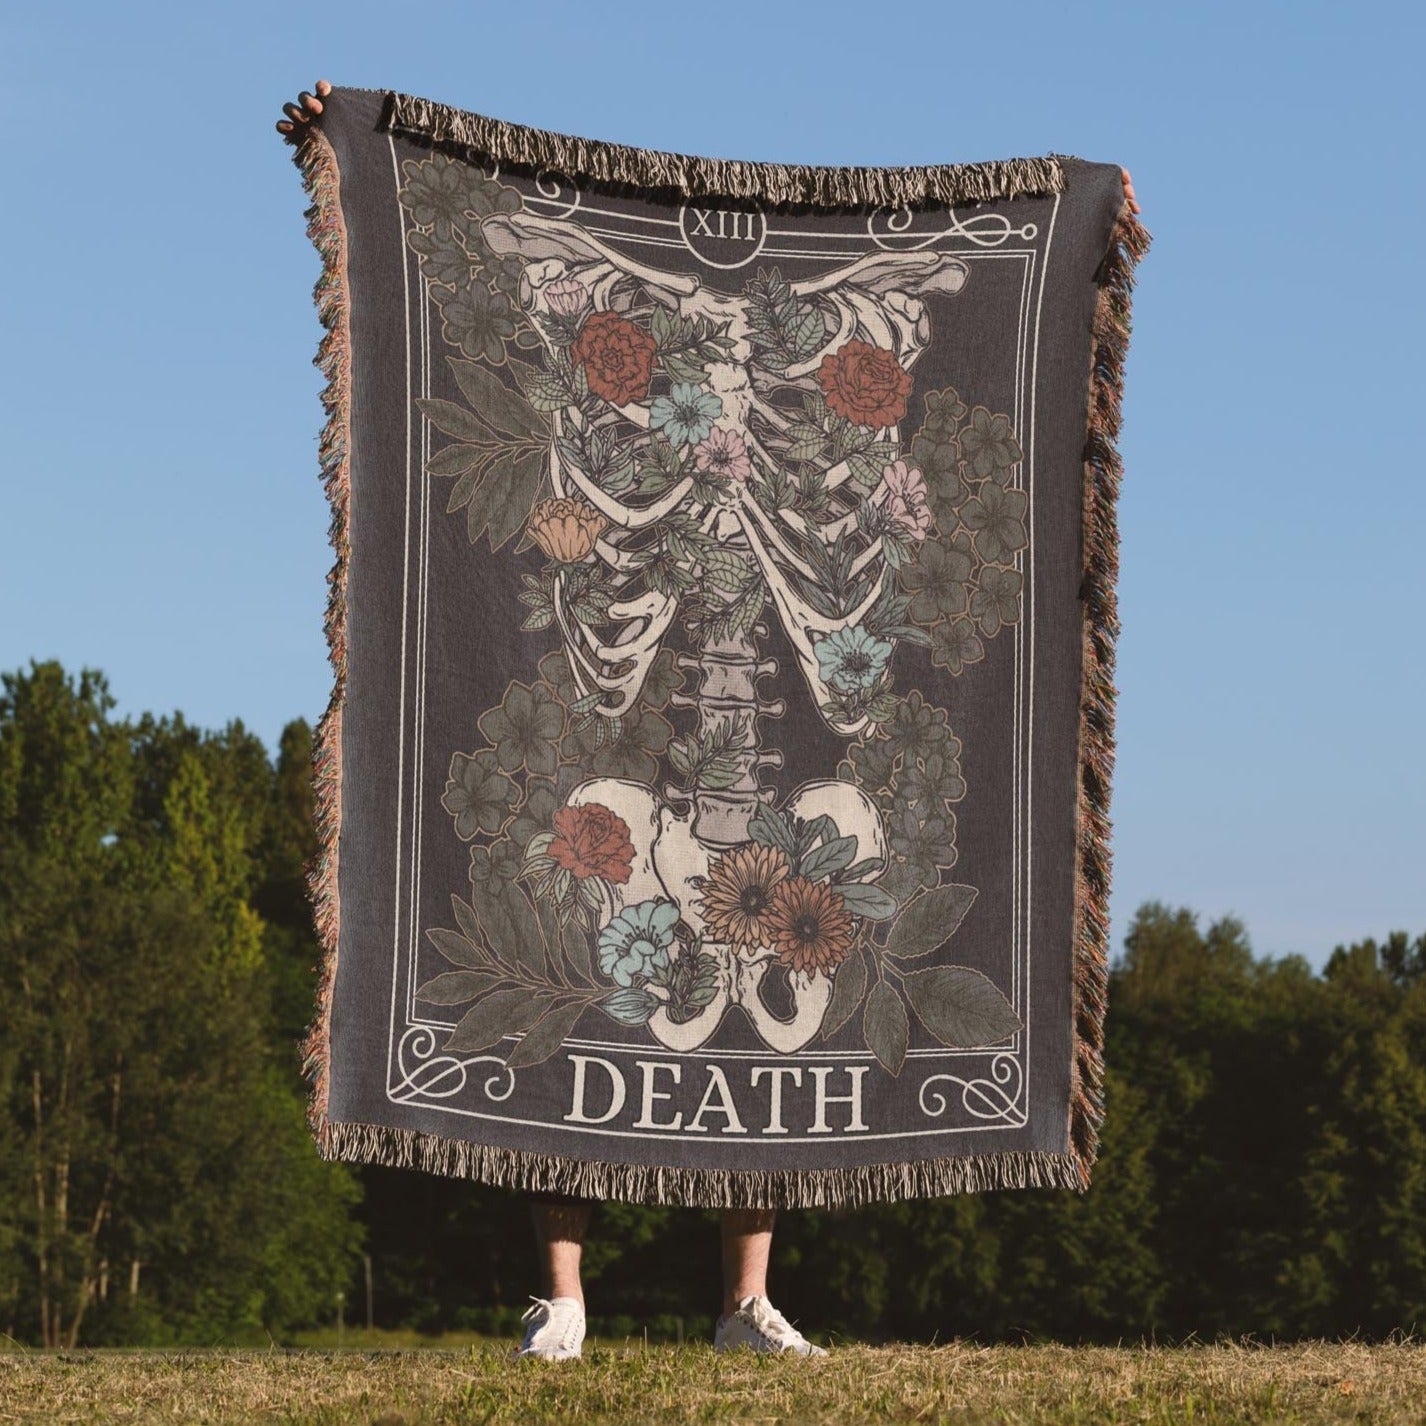 Death Tarot Cotton Woven Throw Blanket Wall Hanging - Esdee